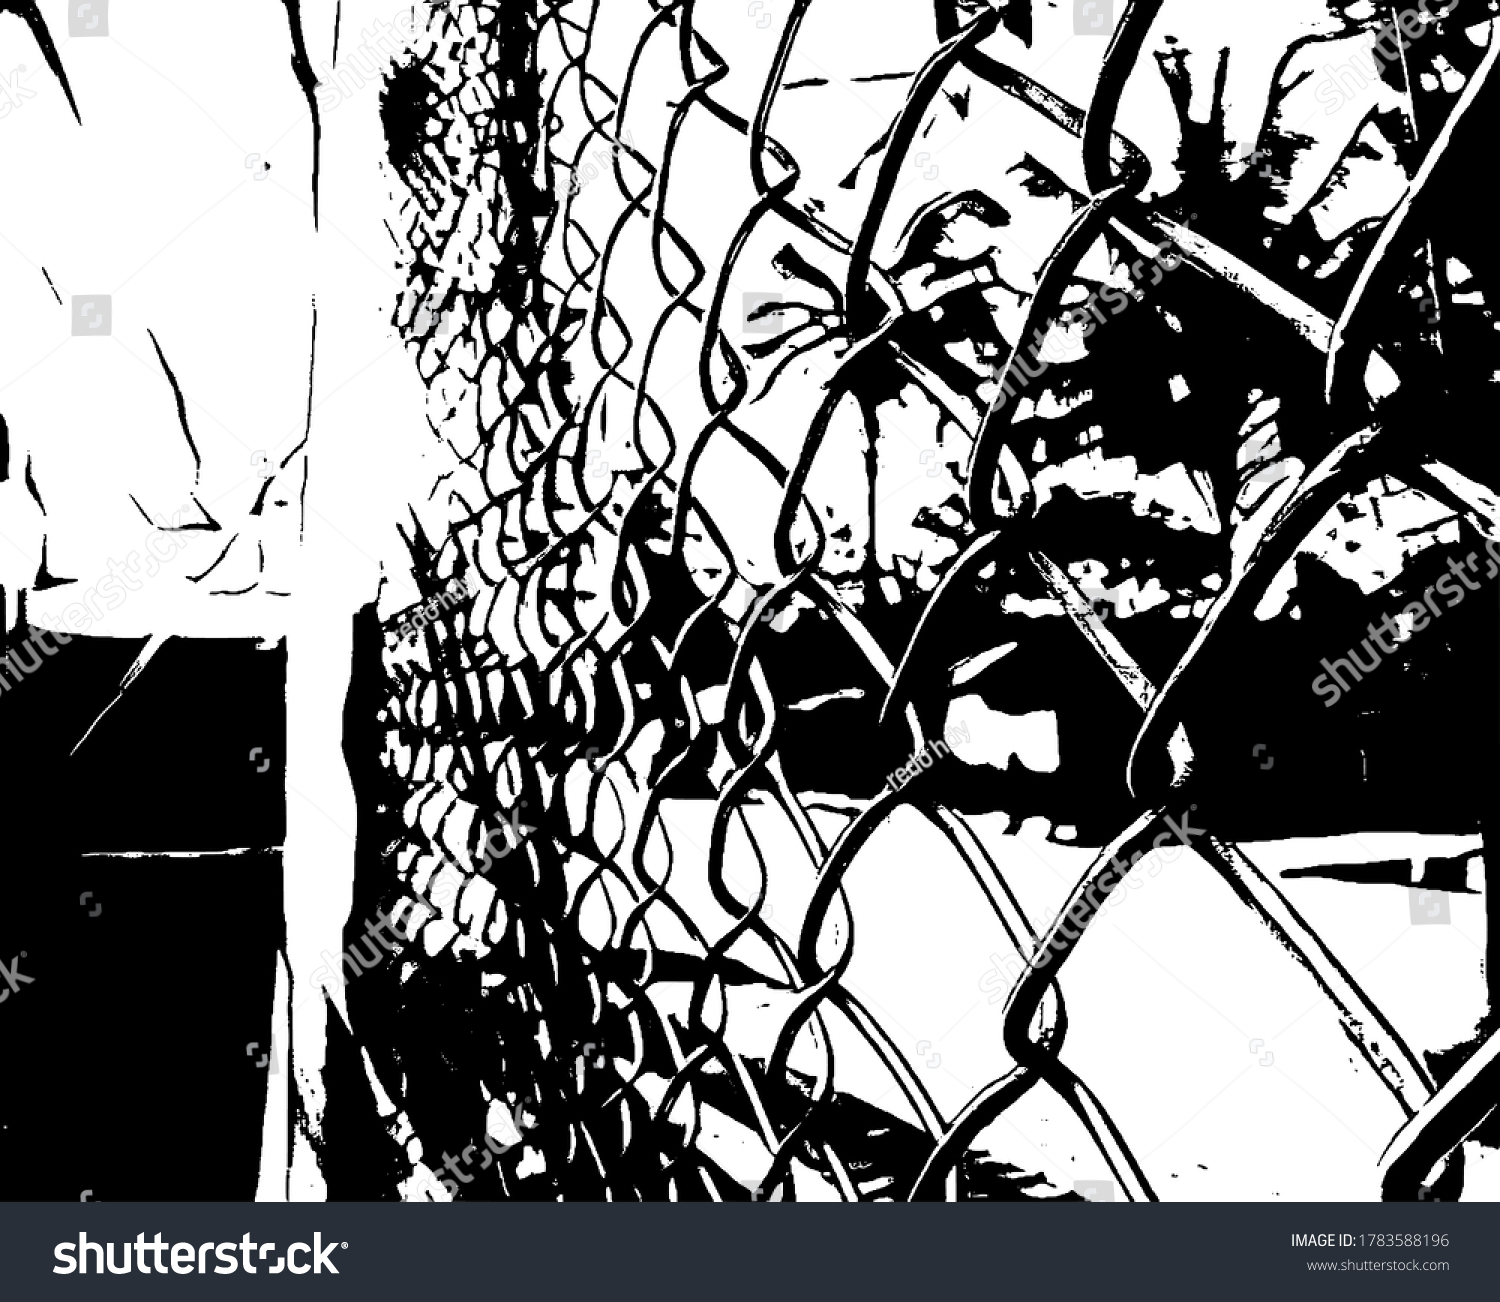 Black White Illustration Chain Link Fence Stock Vector Royalty Free Shutterstock